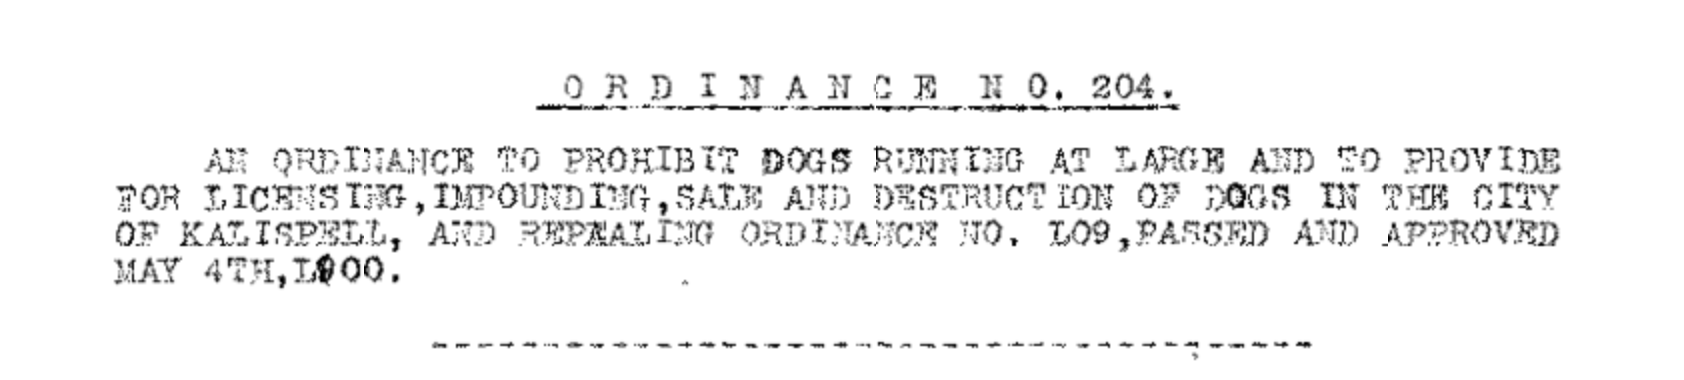 1909 Kalispell Ordinance: Dog Regulations photo of ordinance header